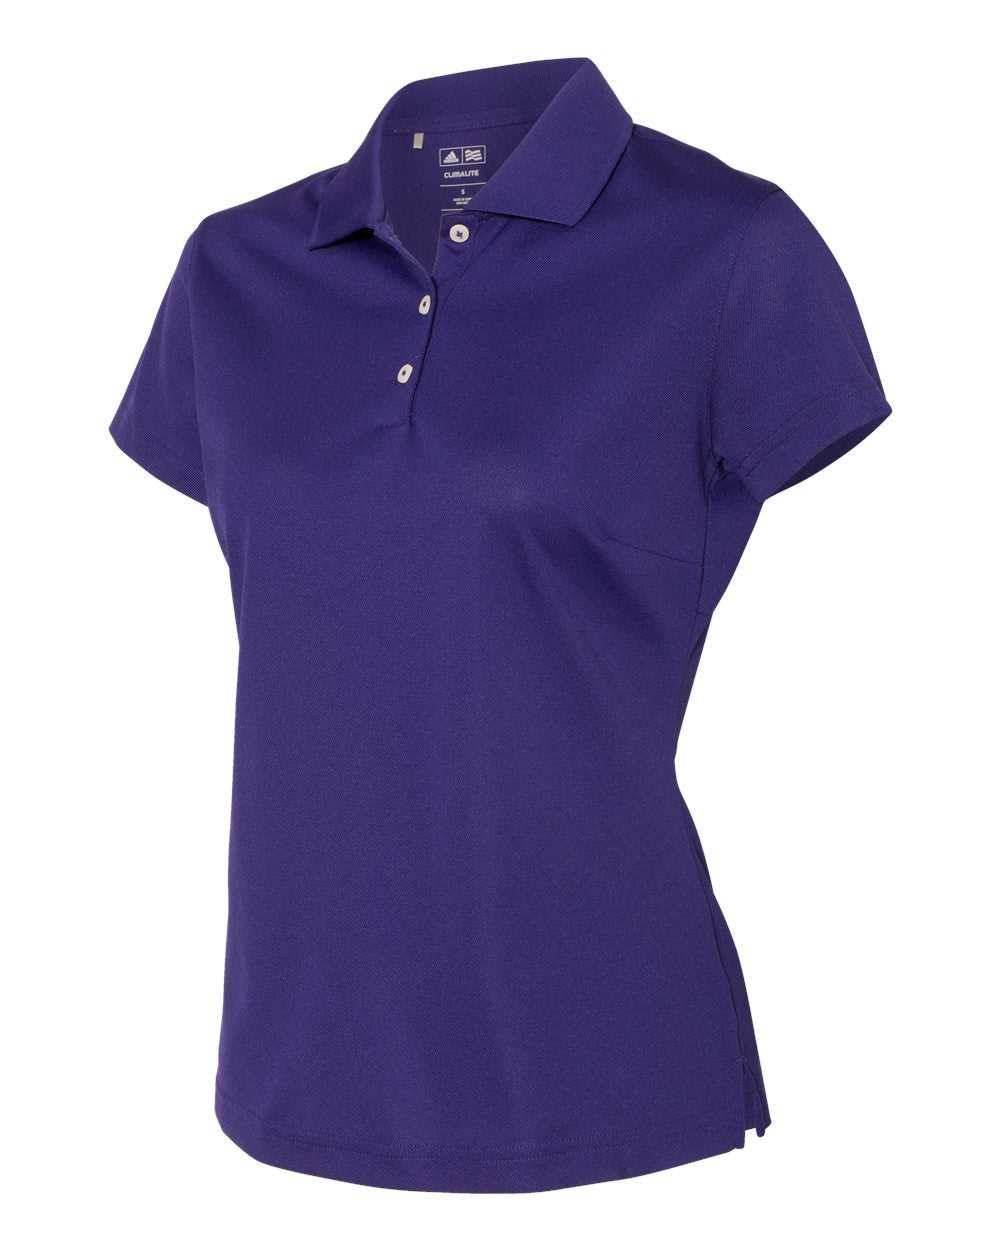 Adidas A131 Women's Basic Sport Shirt - Collegiate Purple White - HIT a Double